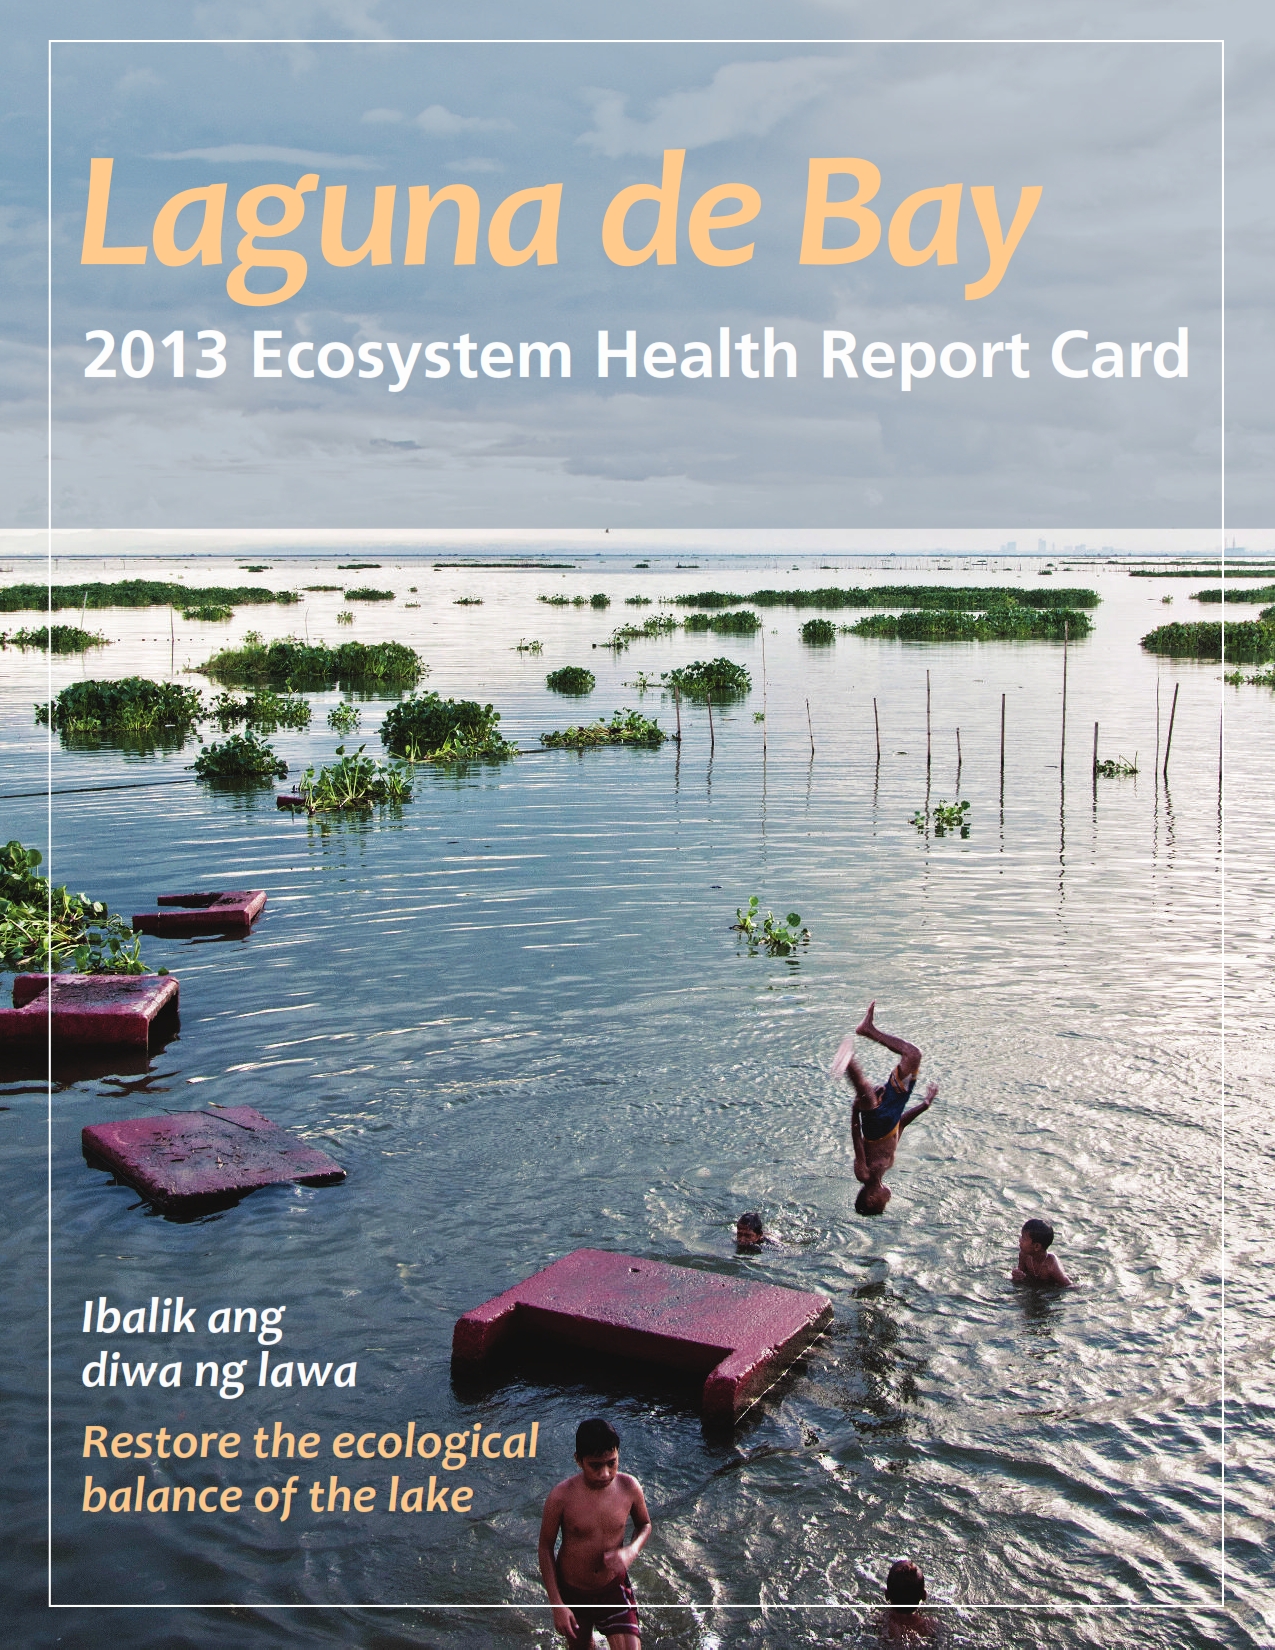 Laguna de Bay 2013 Ecosystem Health Report Card